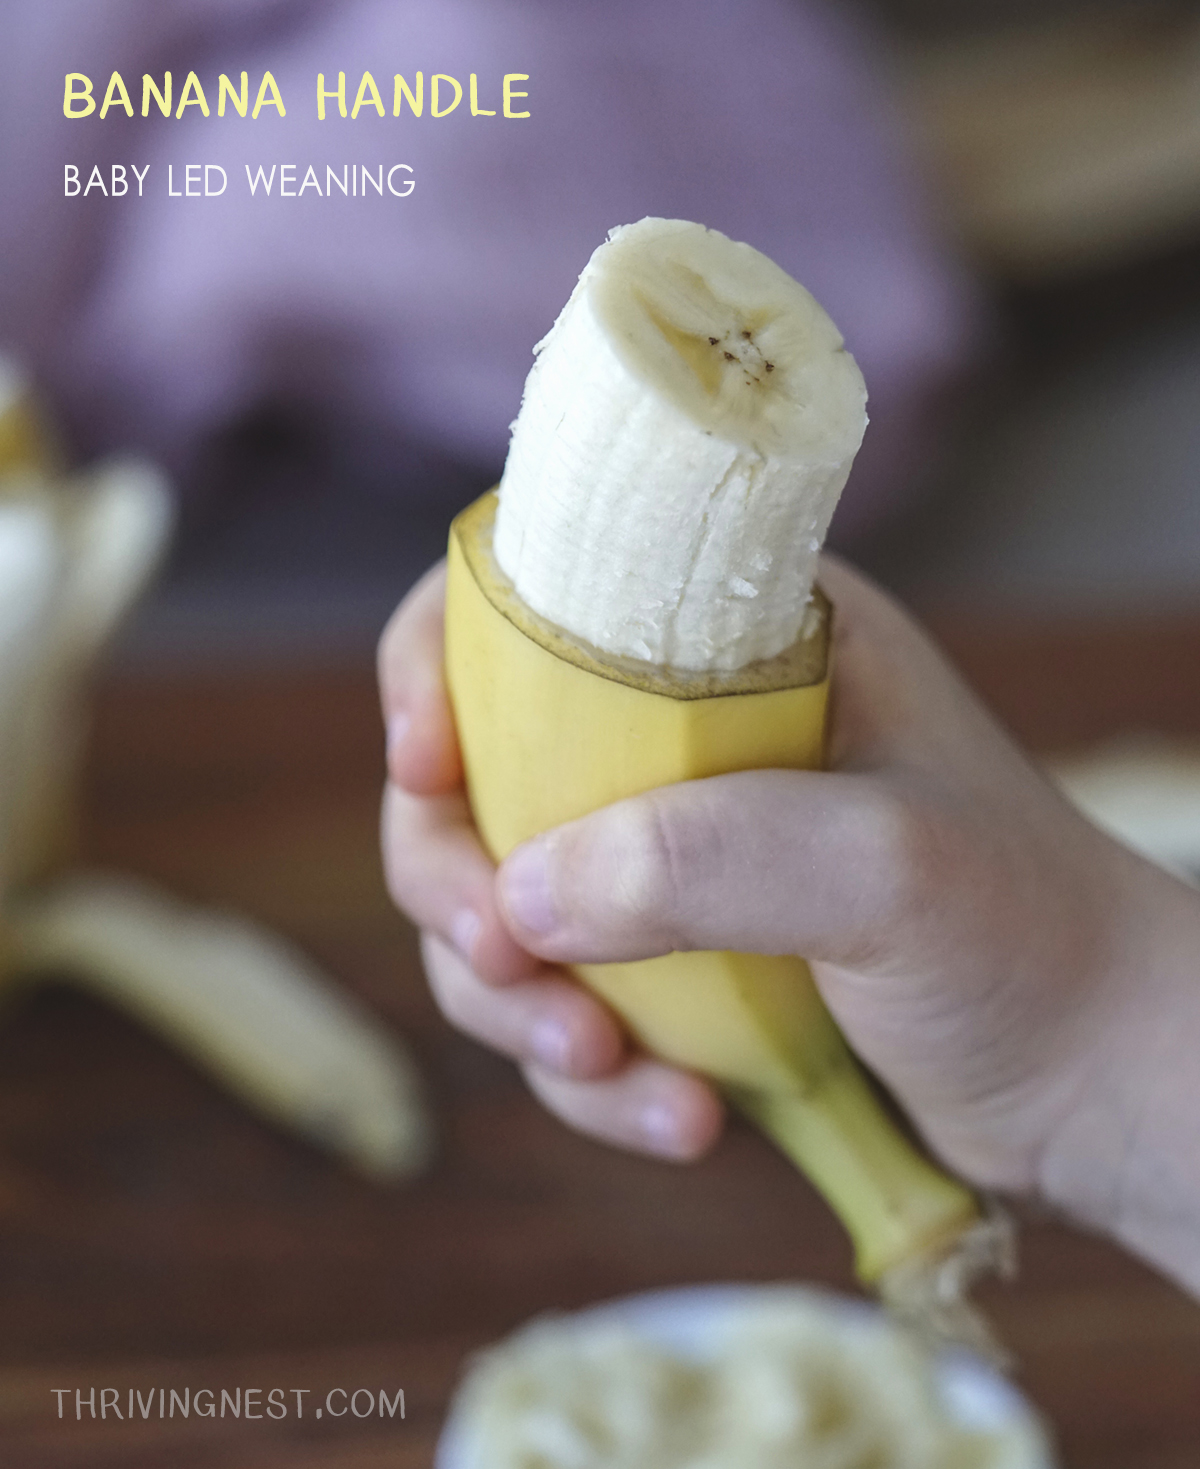 Banana handle for baby led weaning #babyledweaning